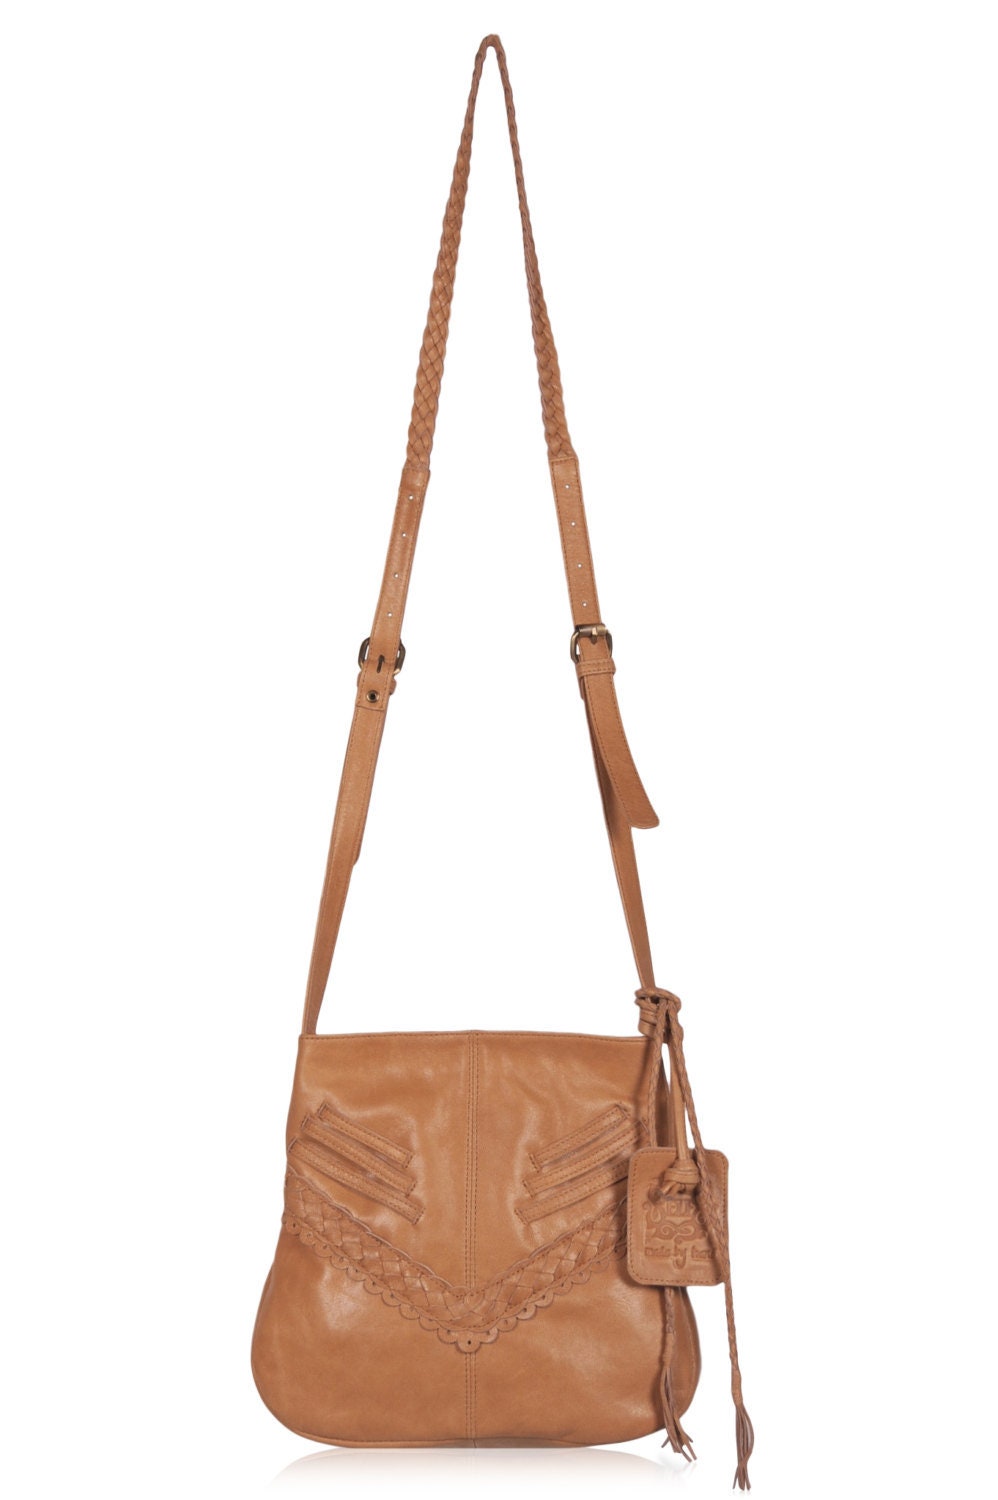 MOJO. Small leather crossbody / bags and purses / small | Etsy